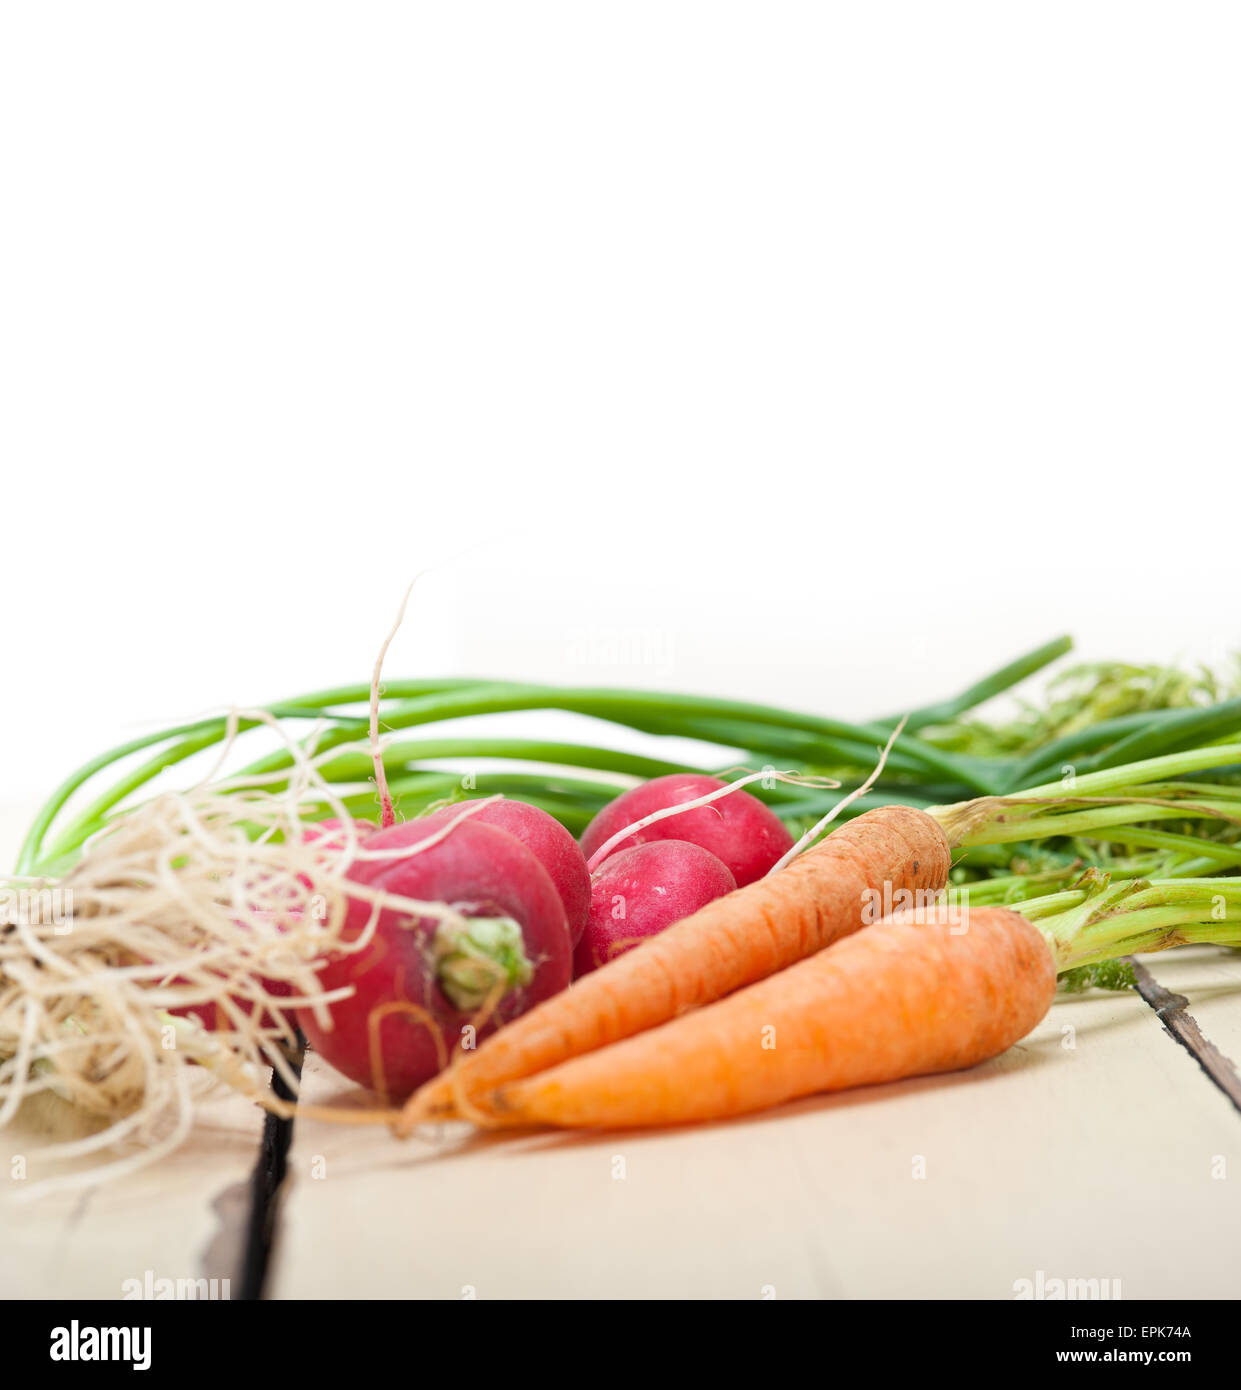 raw root vegetable Stock Photo